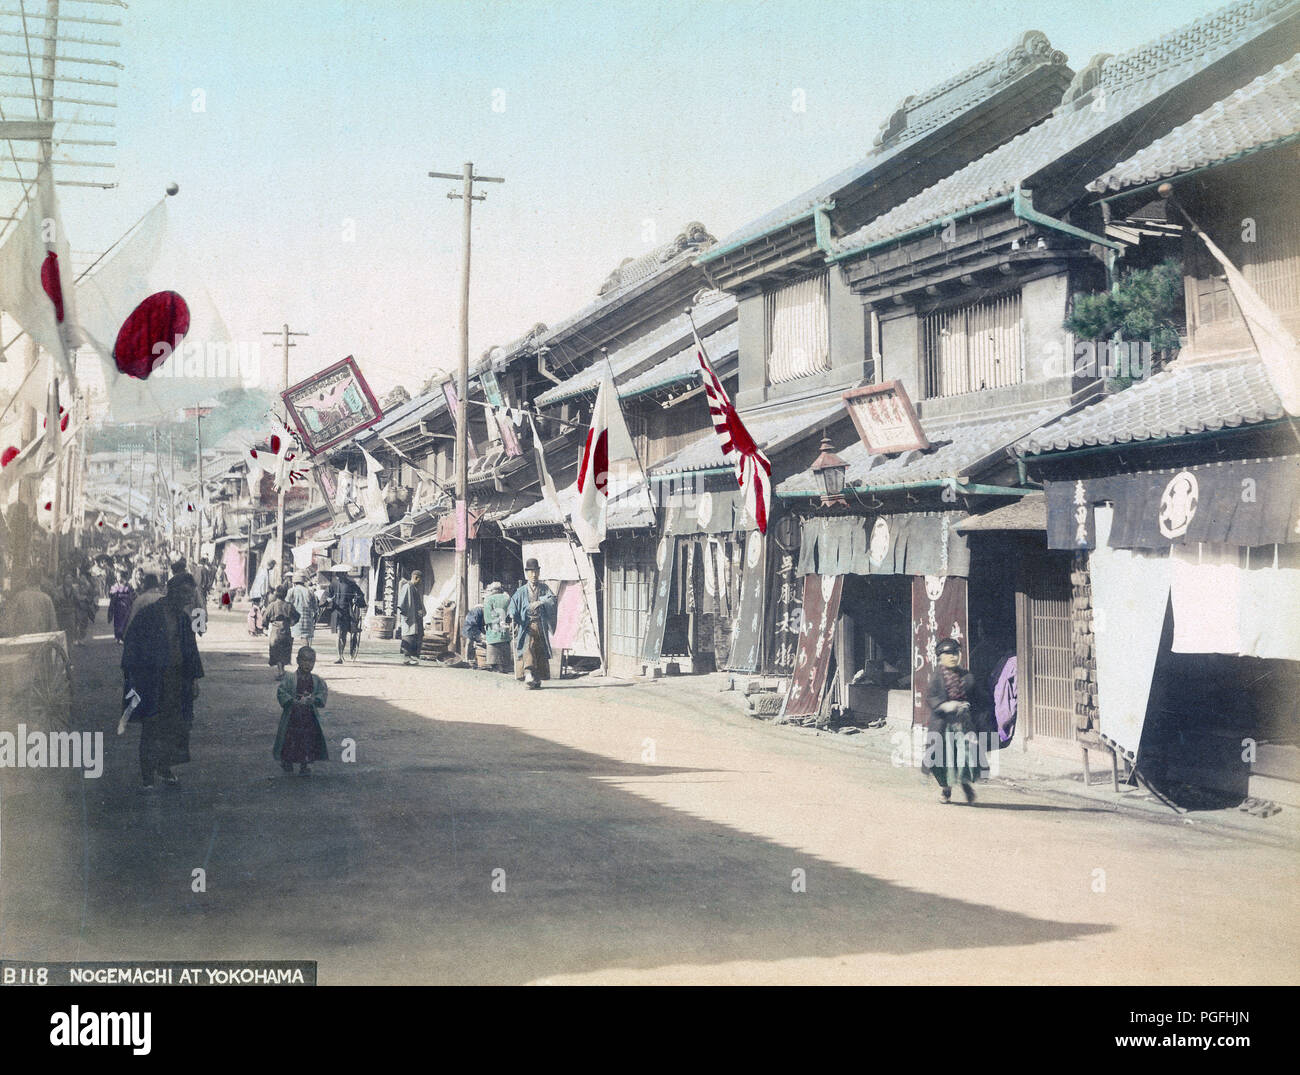 [ Ch. 1890 ] Japon - Yokohama - Nogemachi, Yokohama. 19e siècle vintage albumen photo. Banque D'Images